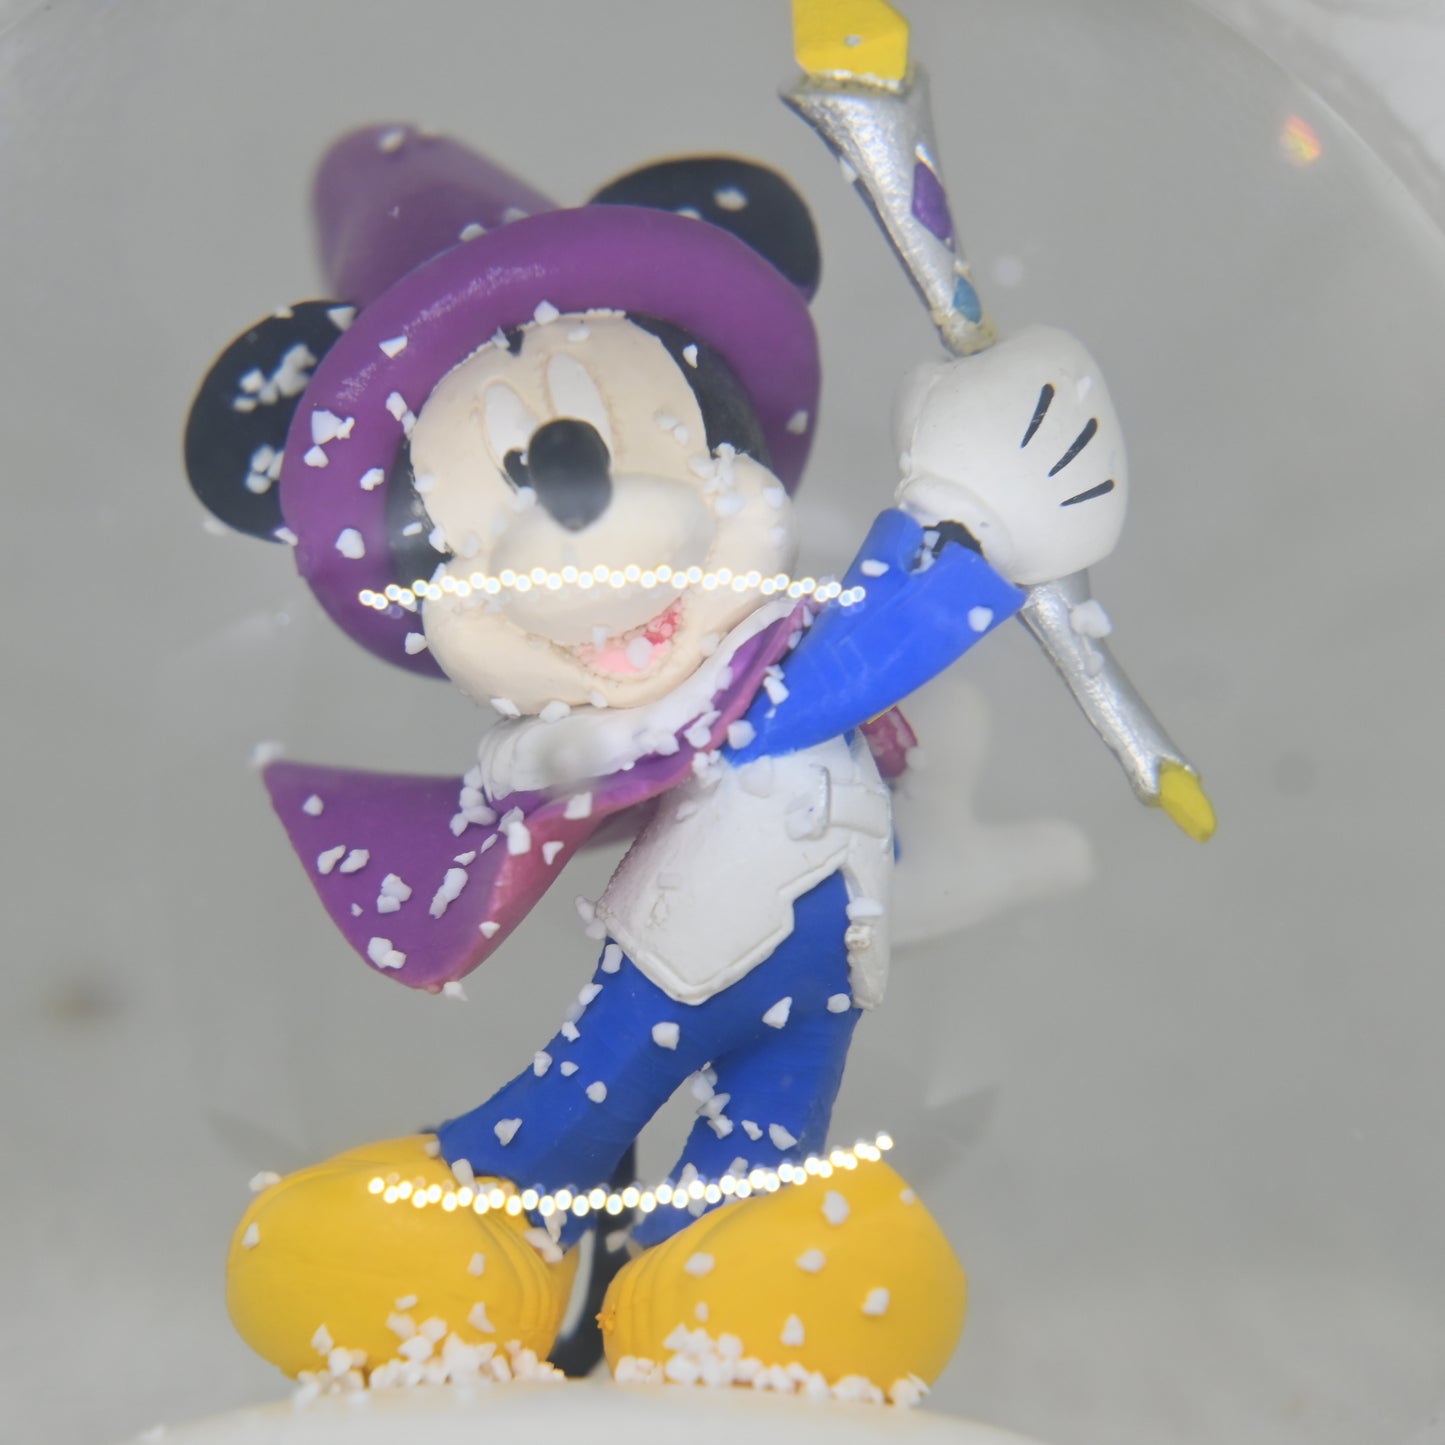 Mickey ‘Happy Lottery Disney Christmas Ornament 2017‘ 水晶球擺設 [現貨]